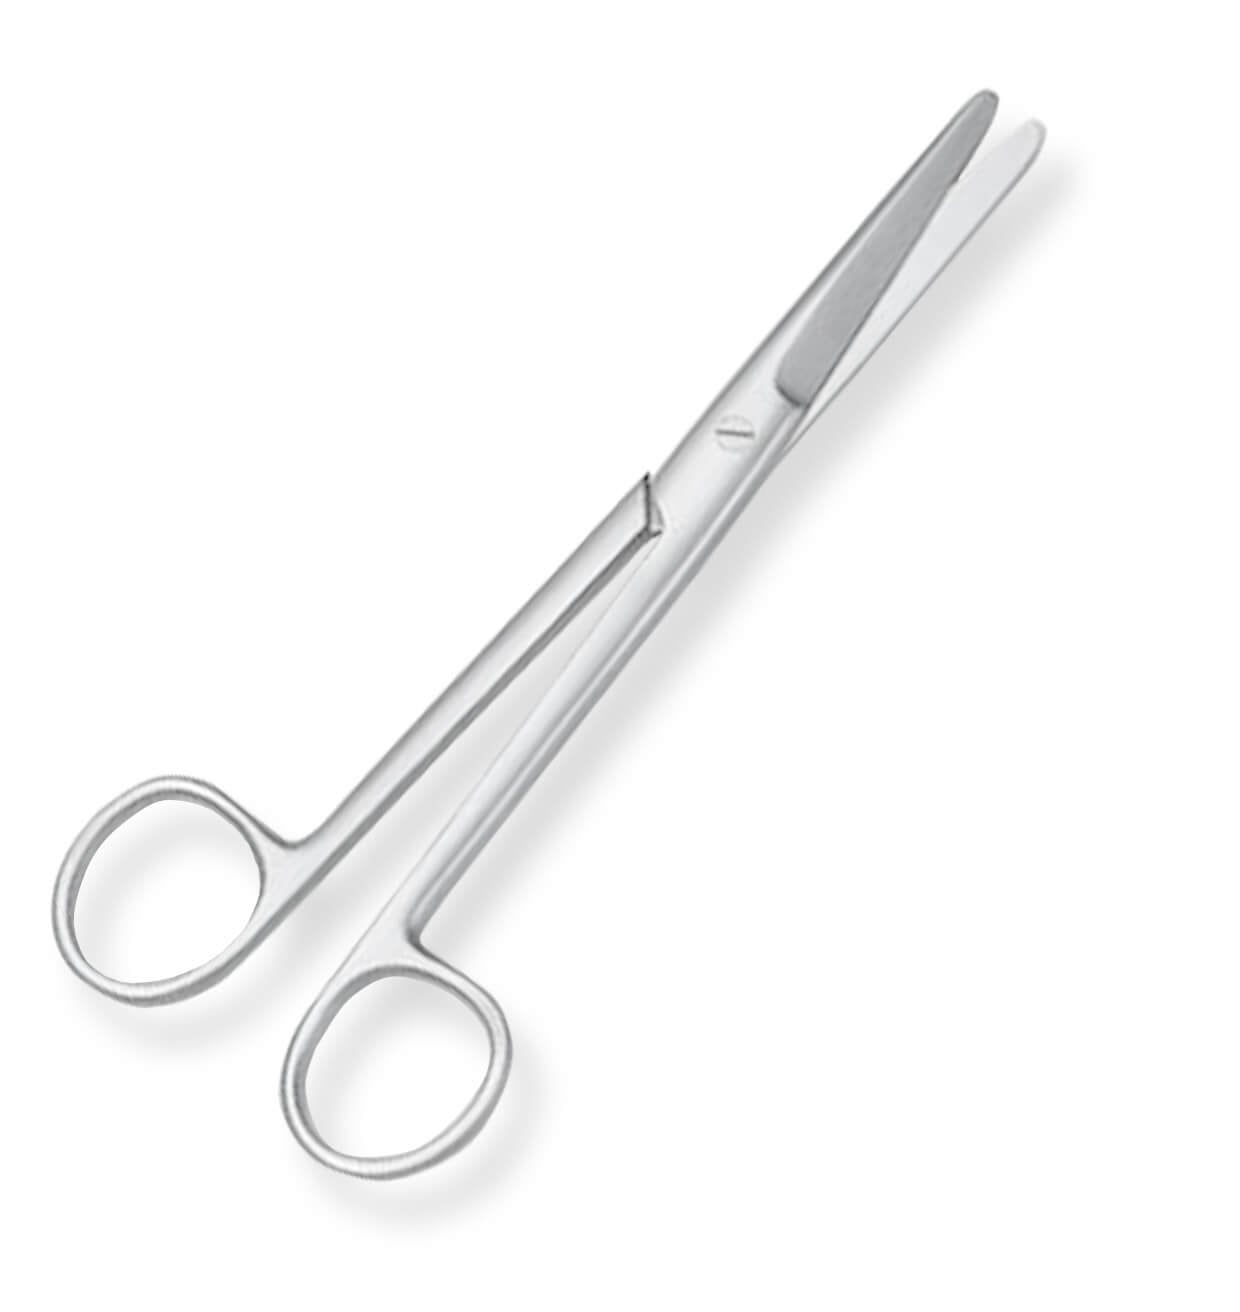 STT-MDSTR7 Premium Quality Mayo Dissecting Scissors, Straight Blunt Stainless Steel, 6.75" L (17.15cm)